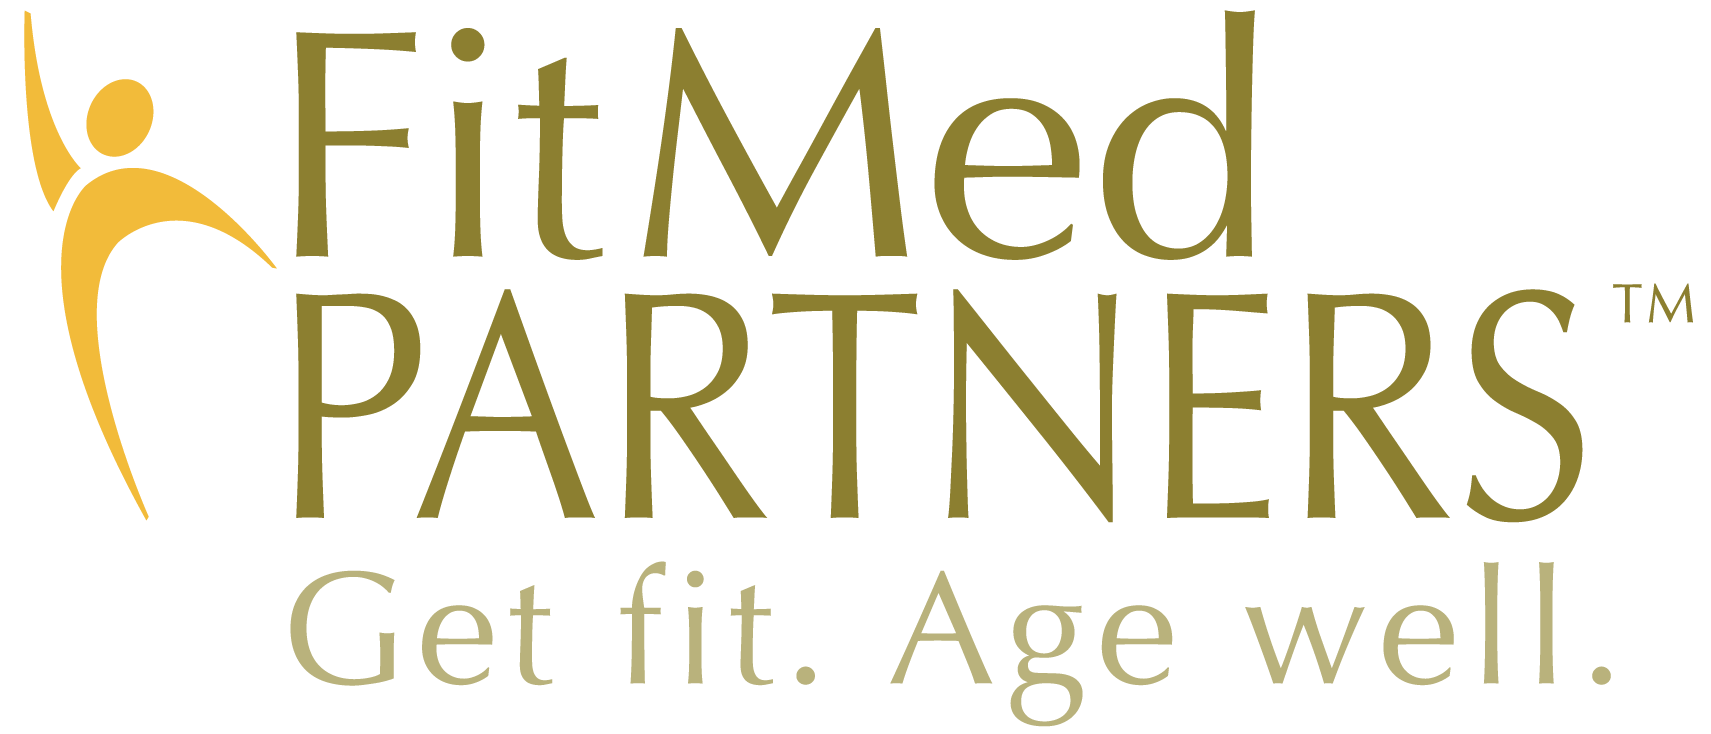 Medically Based Fitness (MBF) Program